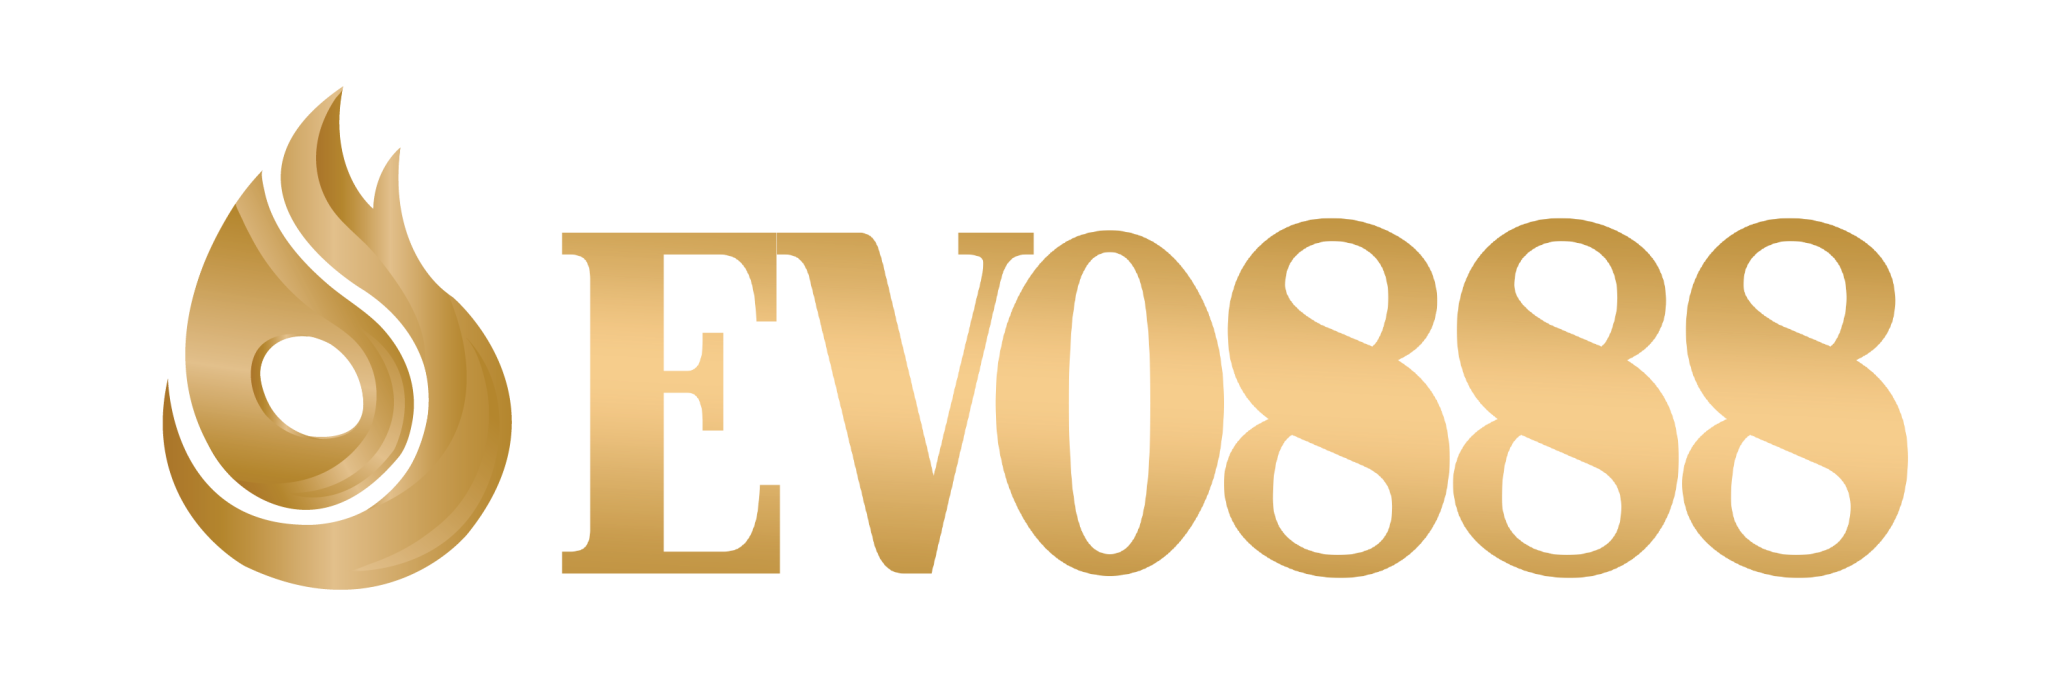 logo_evo888-2048x688